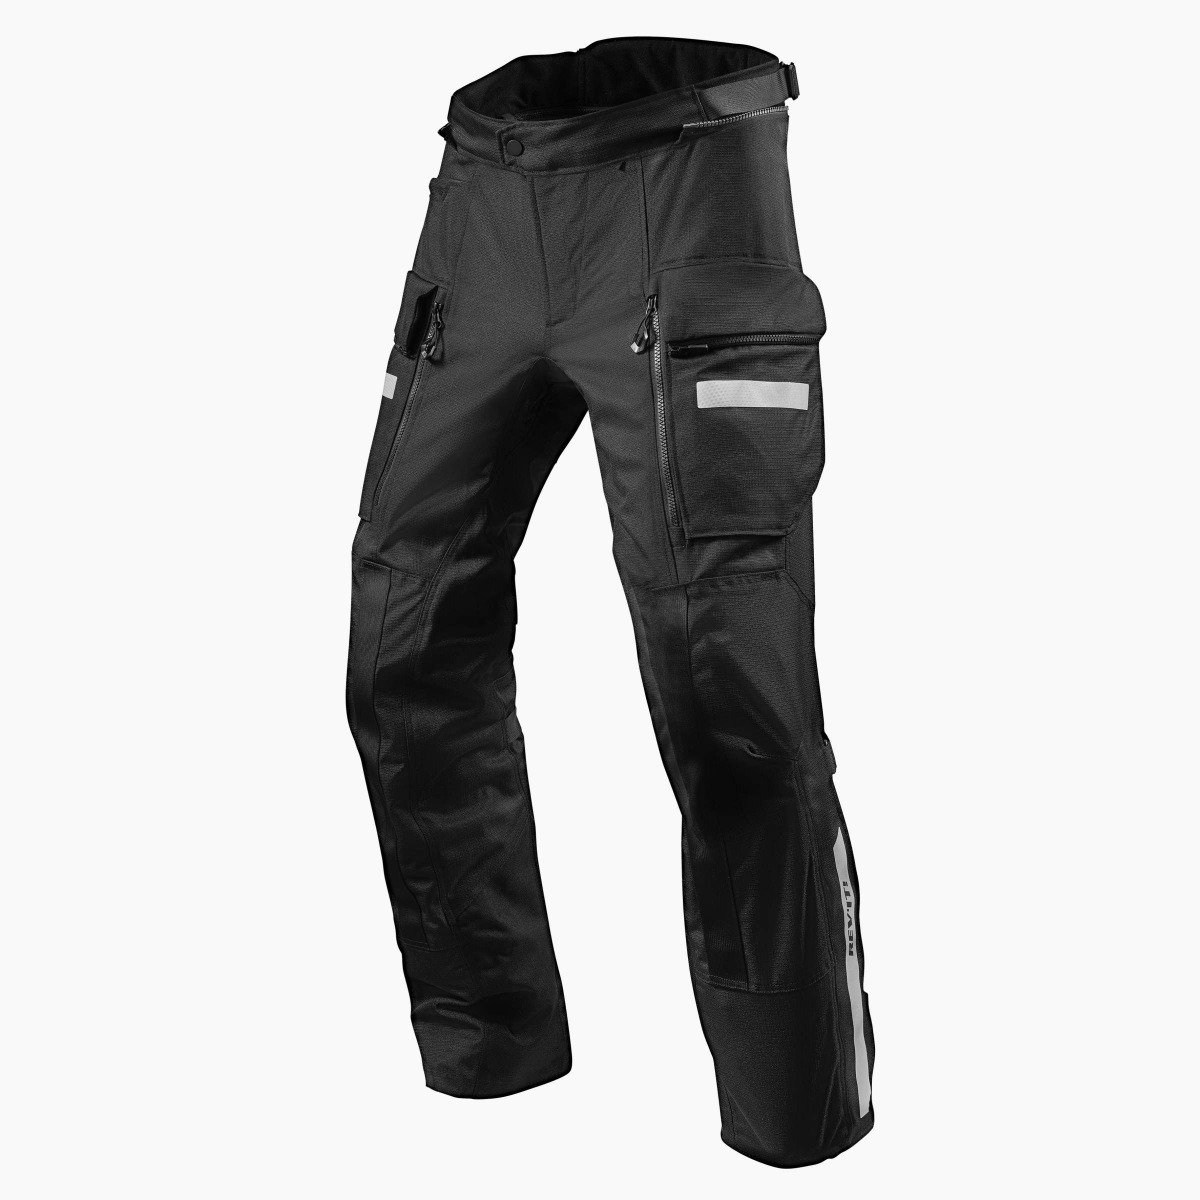 Image of REV'IT! Sand 4 H2O Standard Black Motorcycle Pants Talla XS